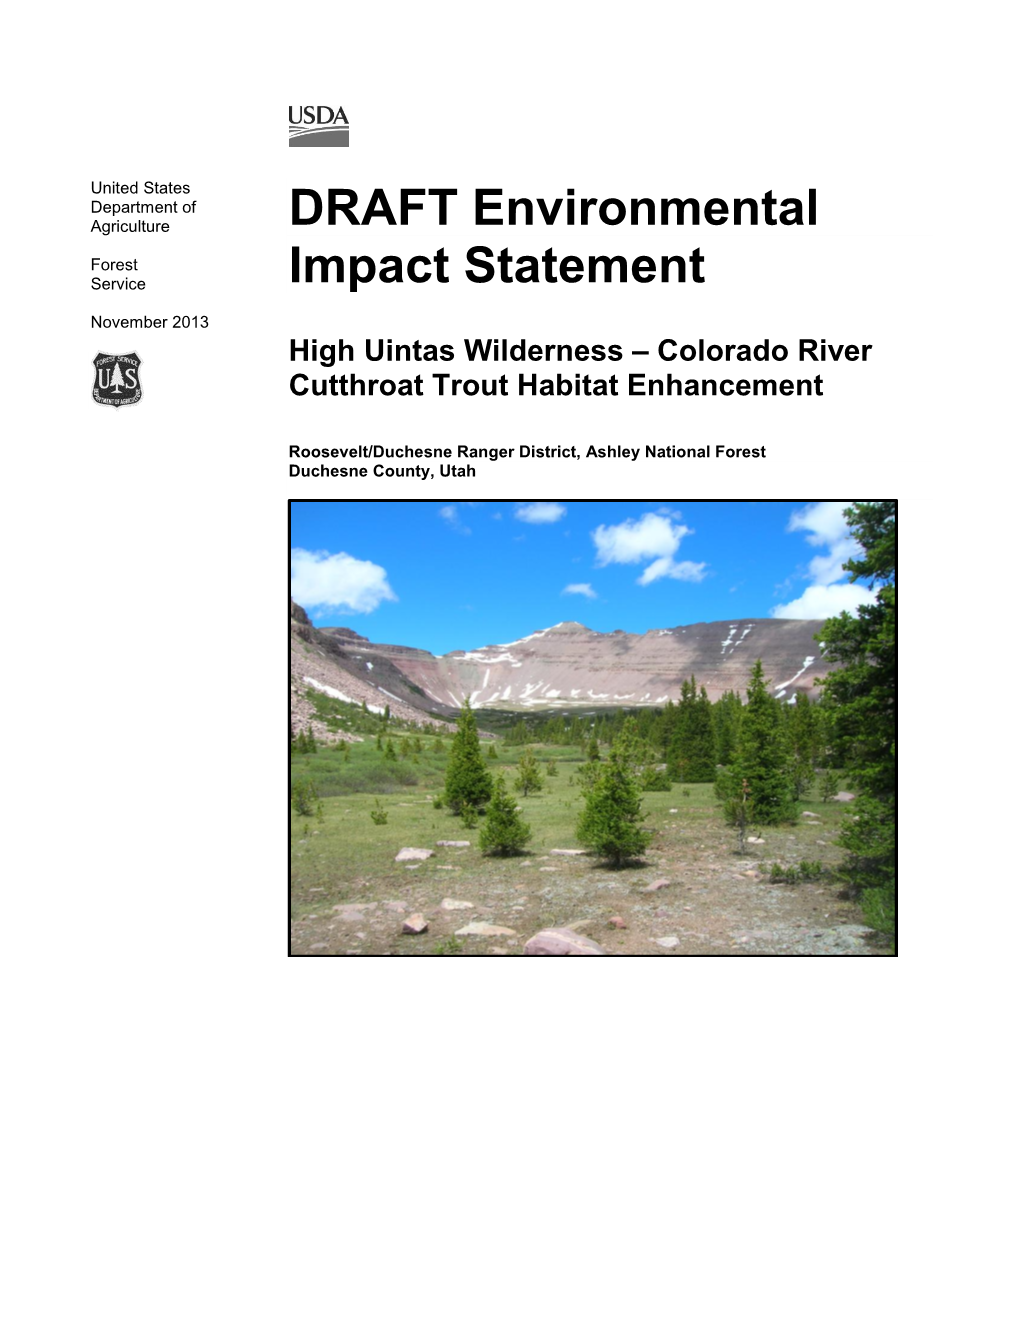 Draft Environmental Impact Statement High Uintas Wilderness – Colorado River Cutthroat Trout Habitat Enhancement